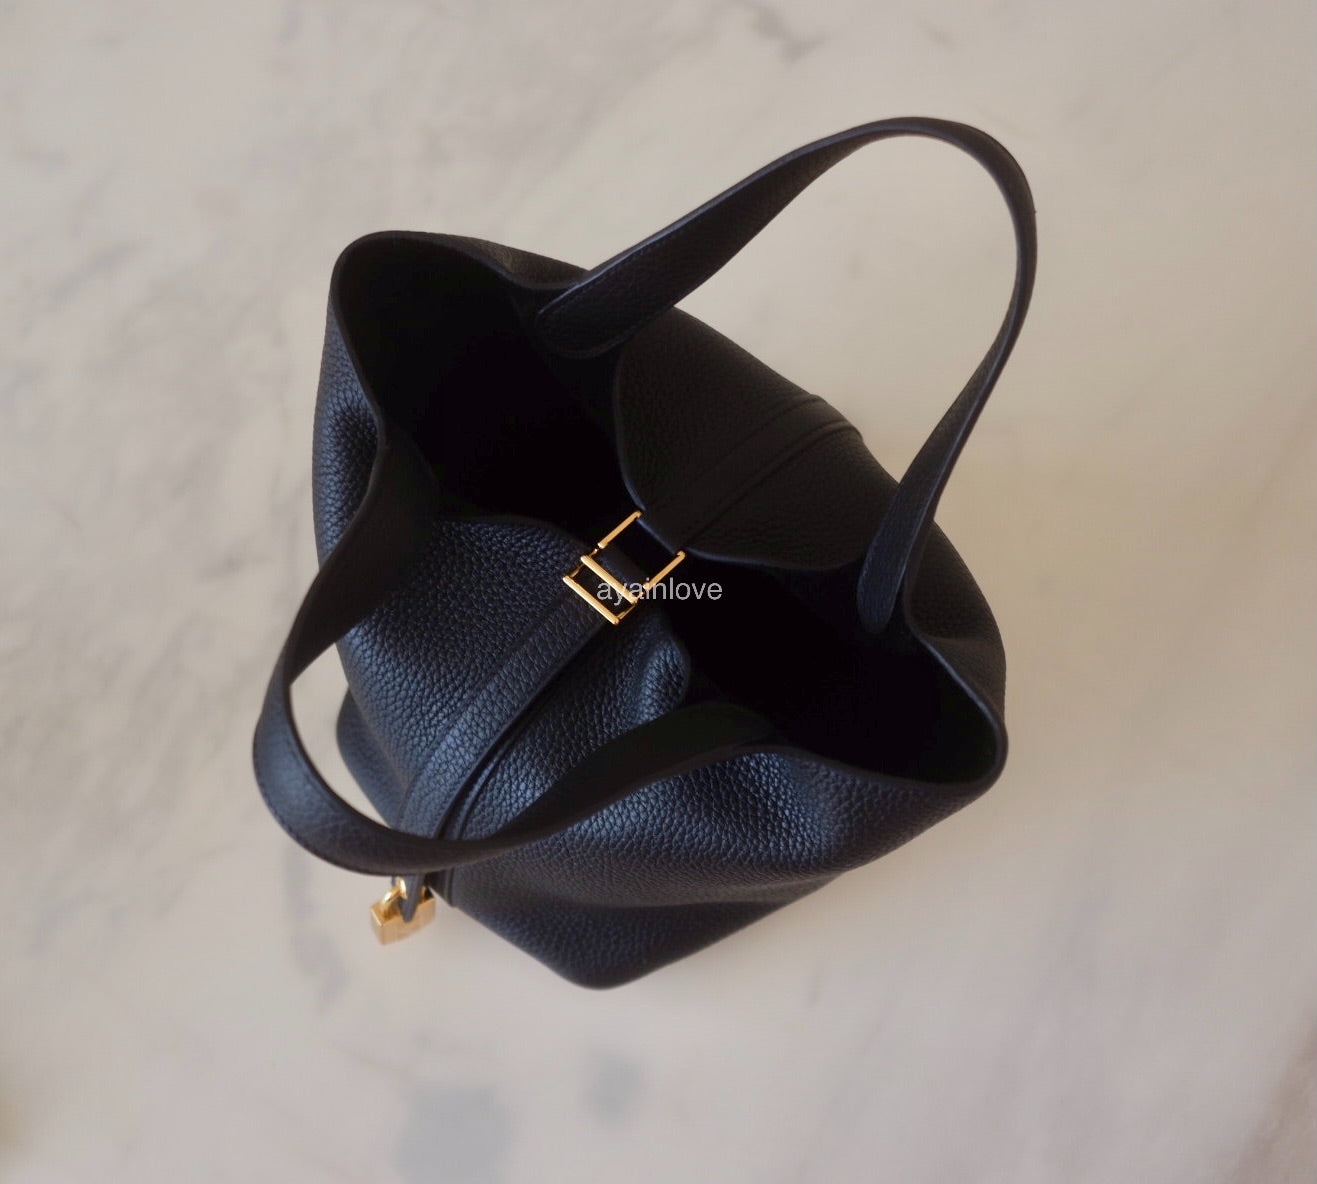 Hermès Picotin Lock 18 Bag Noir Clemence